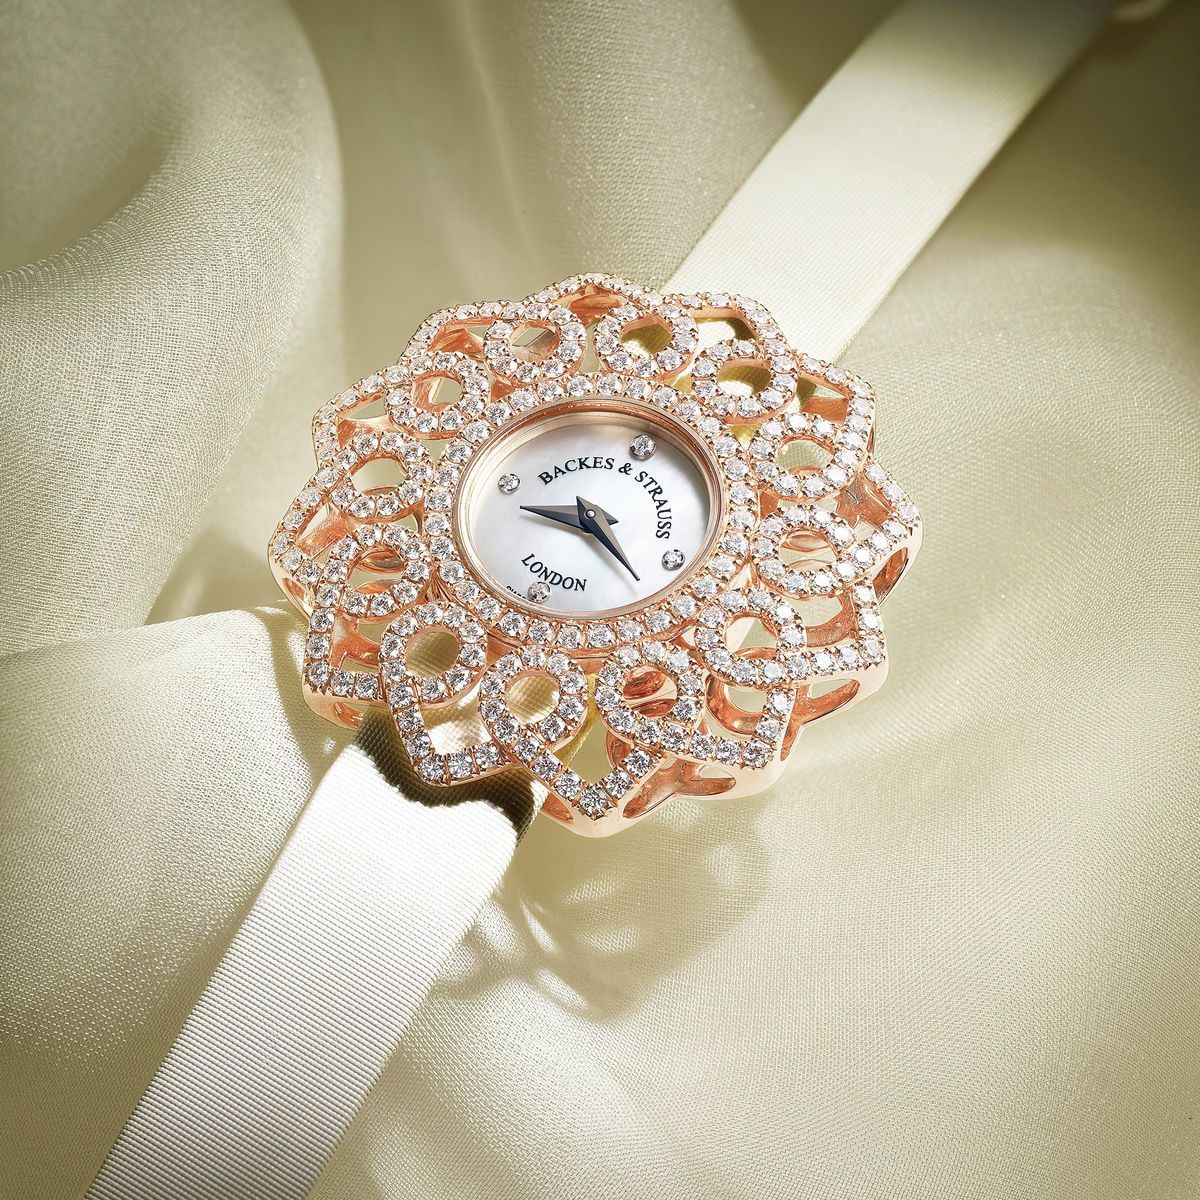 Backes & Strauss - Victoria Snowdrop Luxury Diamond Watch for Women - Rose Gold  - Display